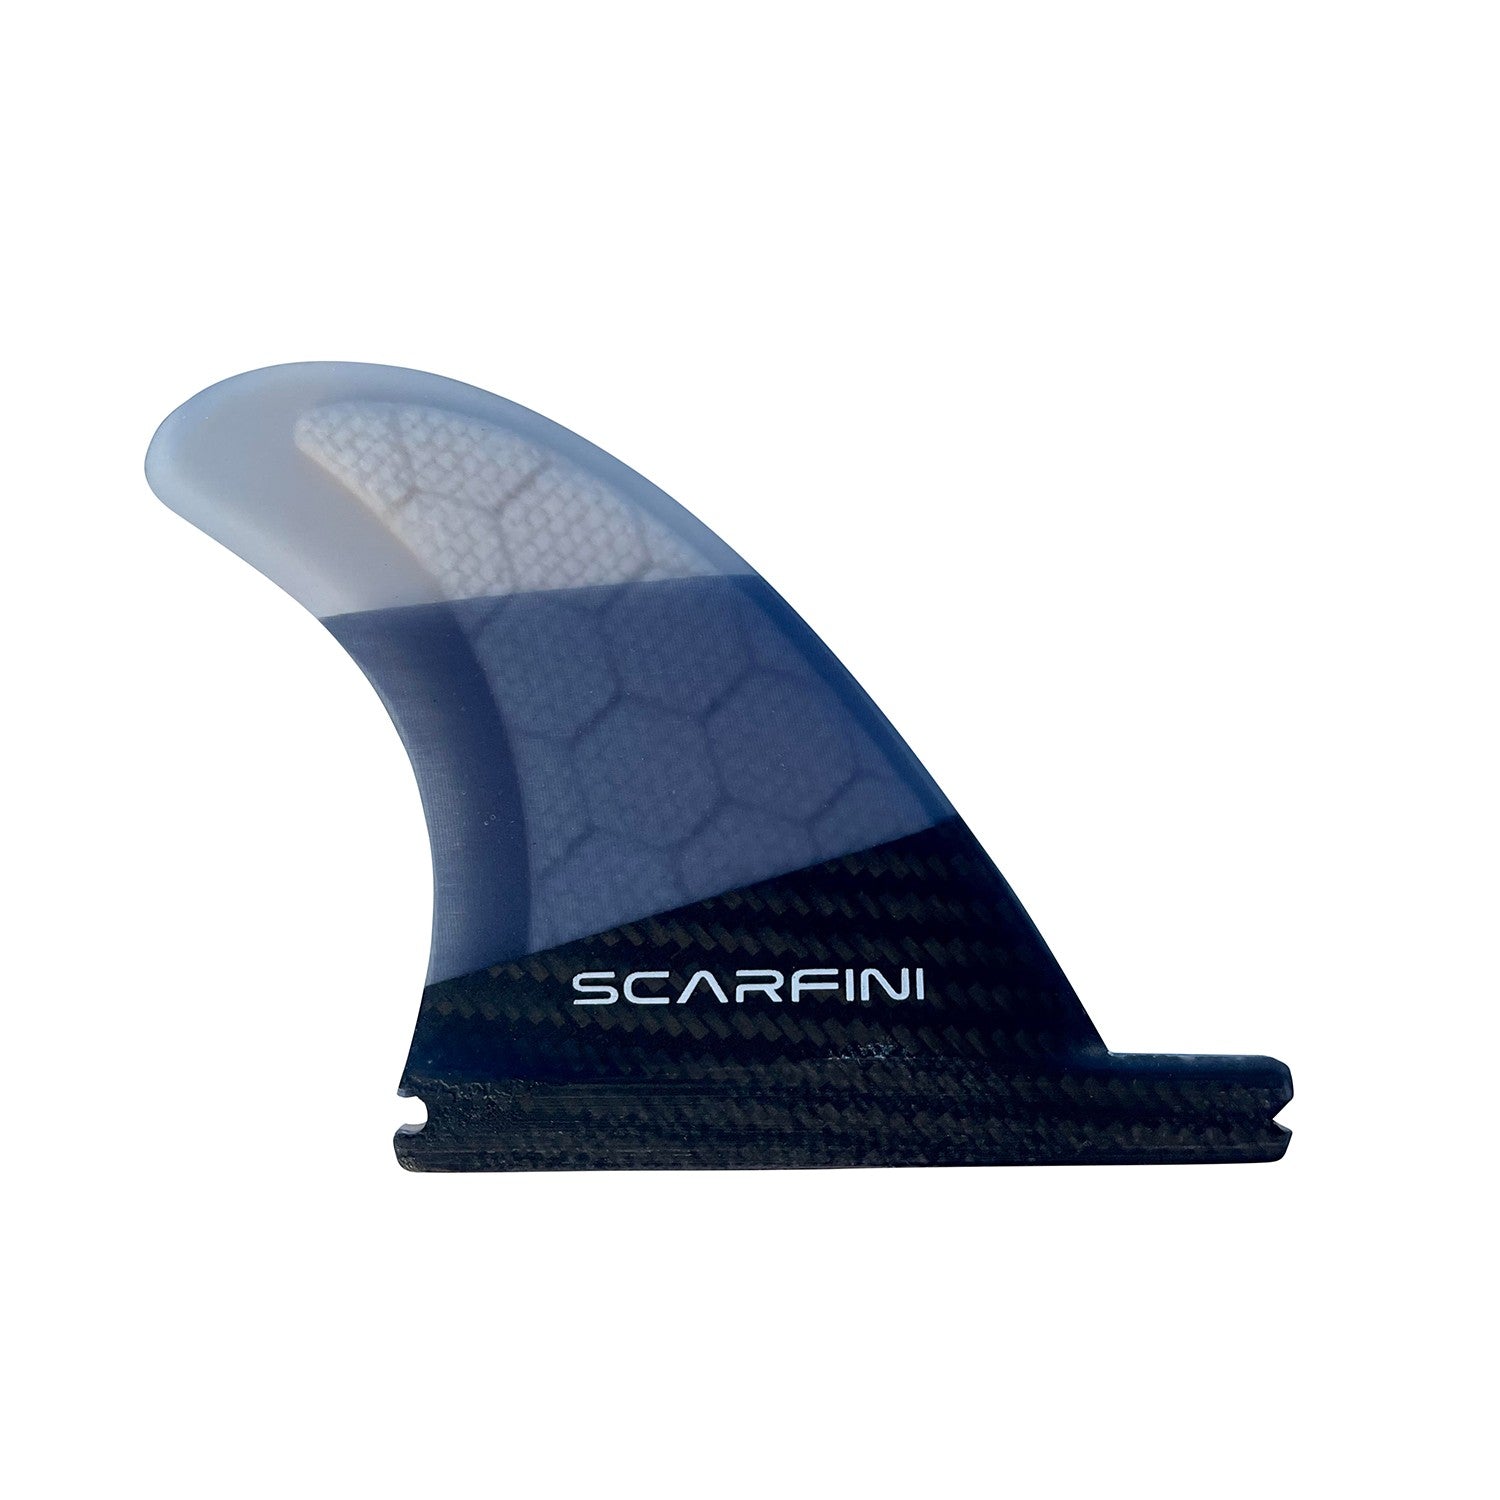 SCARFINI - Stabilizer  (Futures)